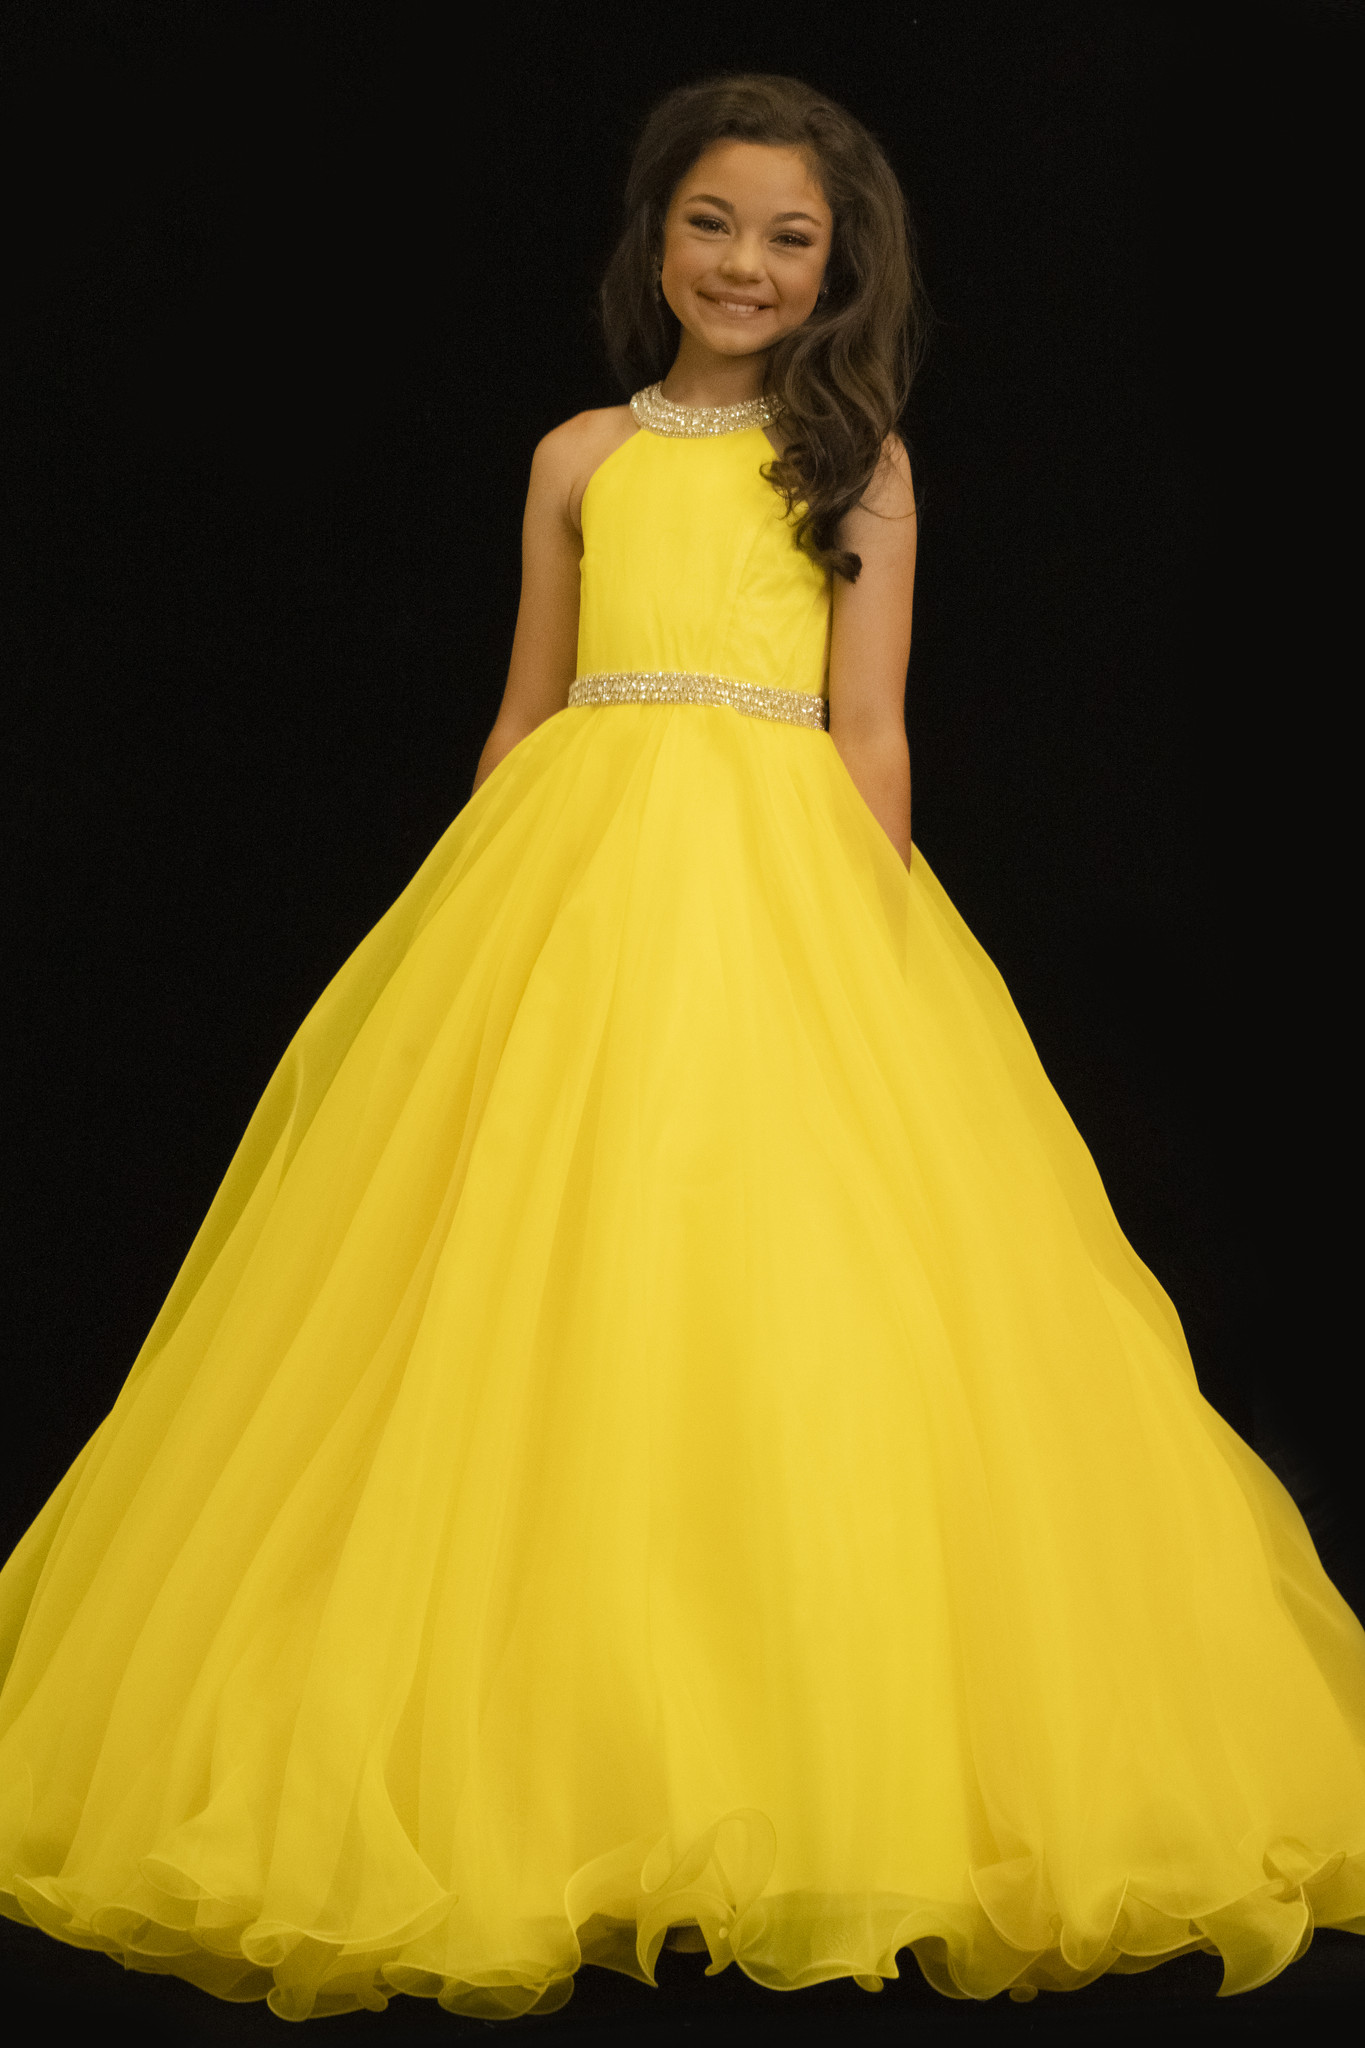 High Neckline Ball Gown Sugar Kayne C114 Pageant Dress - PageantDesigns.com